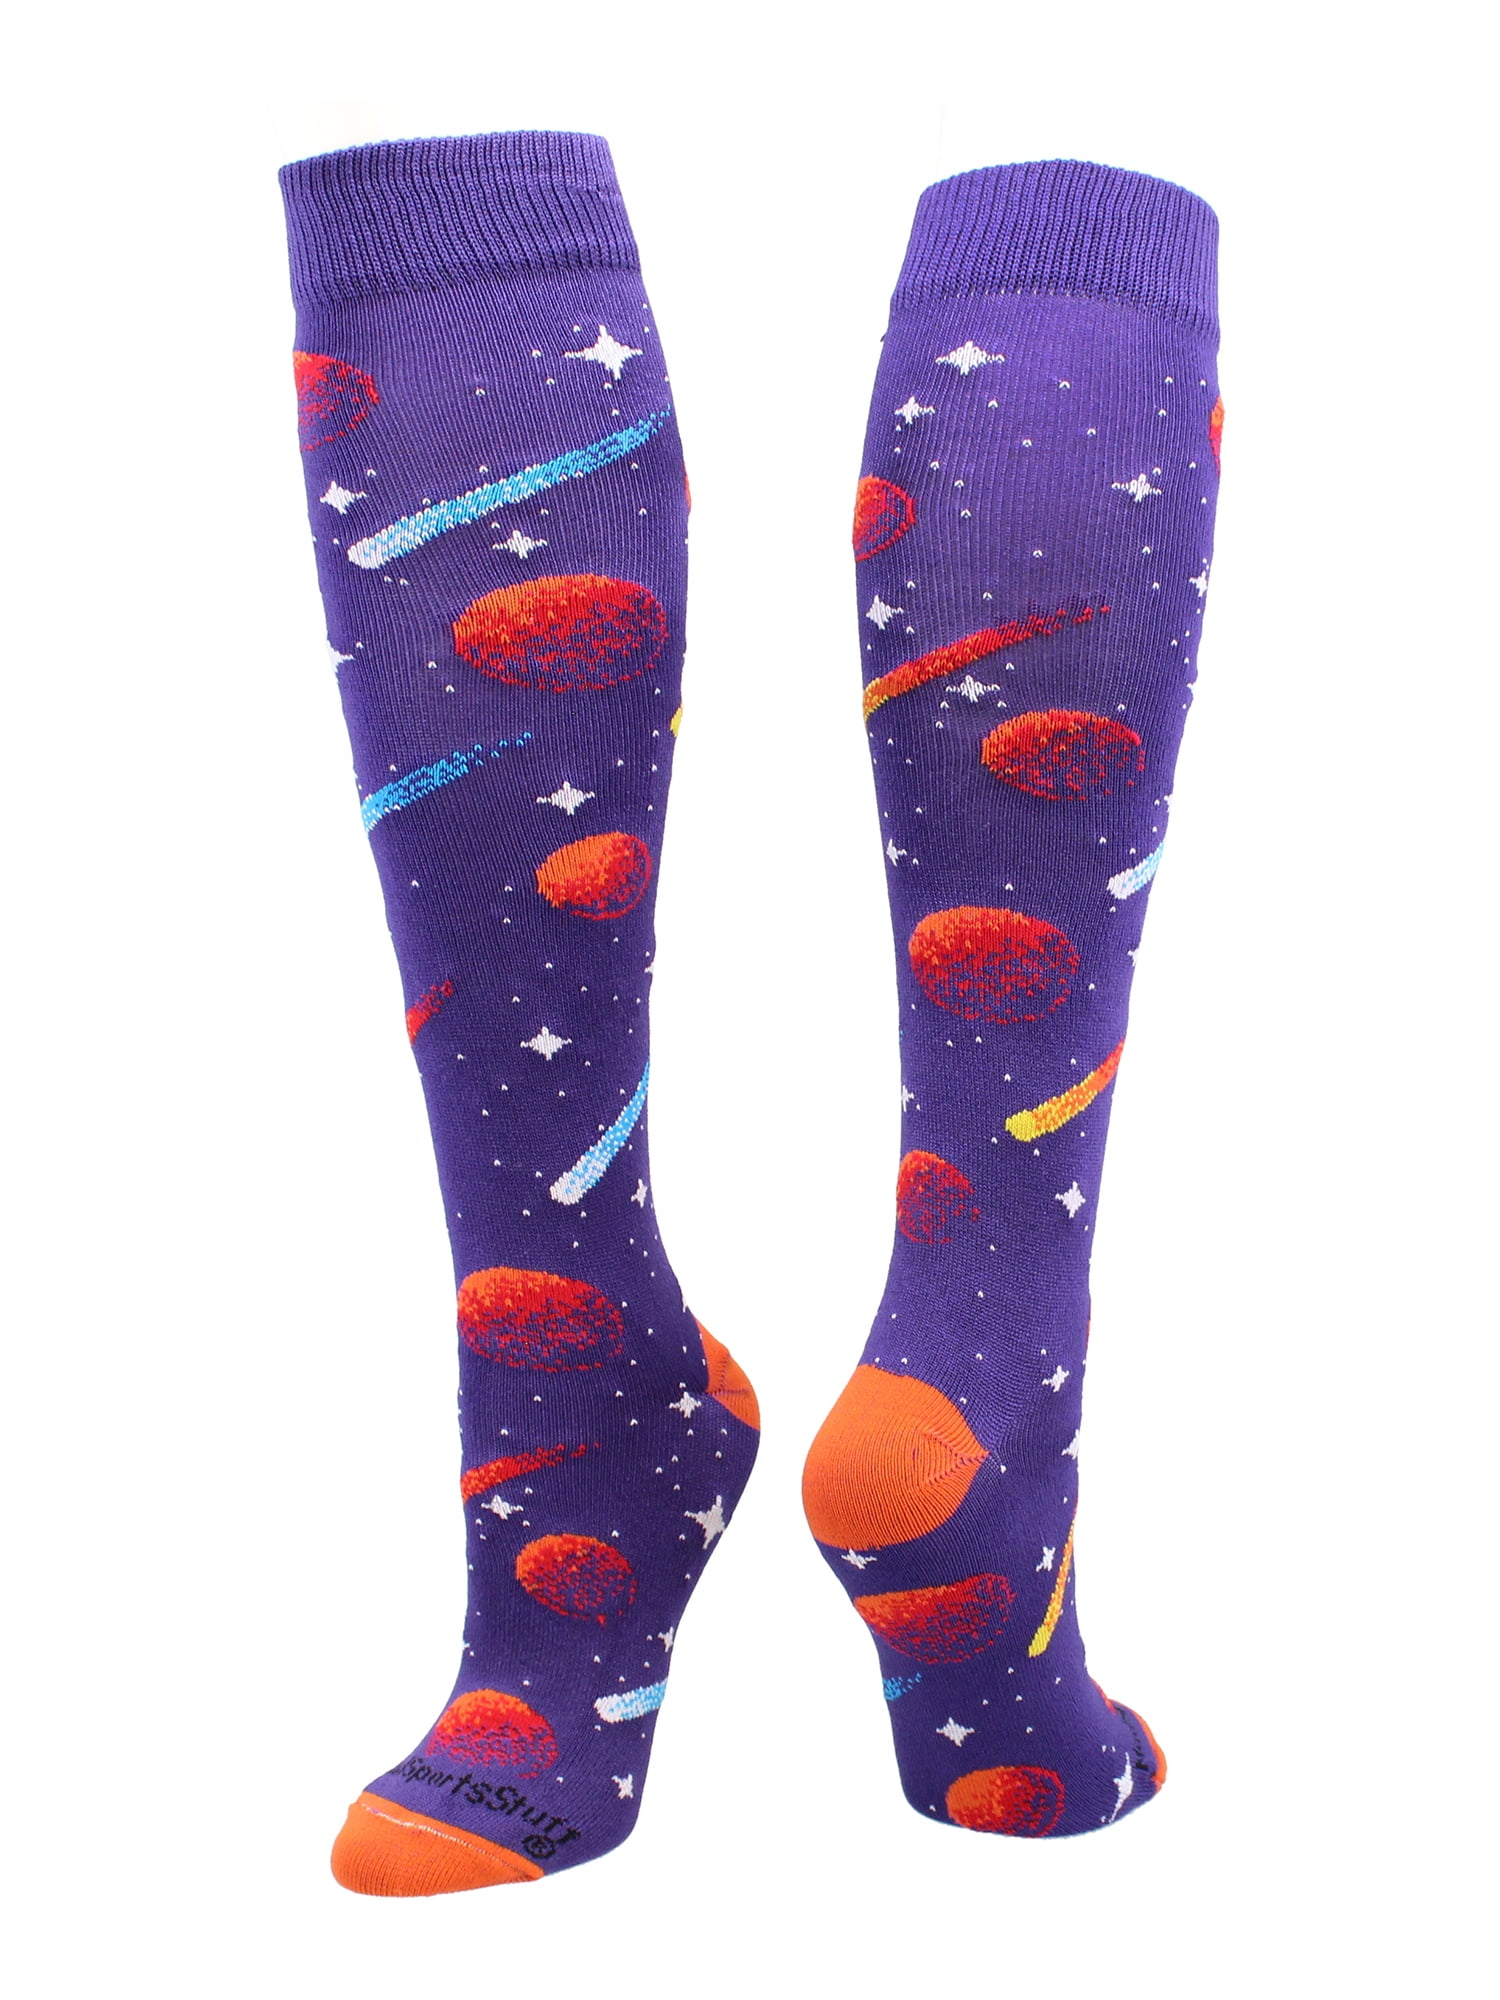 MadSportsStuff - Outer Space Galaxy Socks Over the Calf (Purple/Orange ...